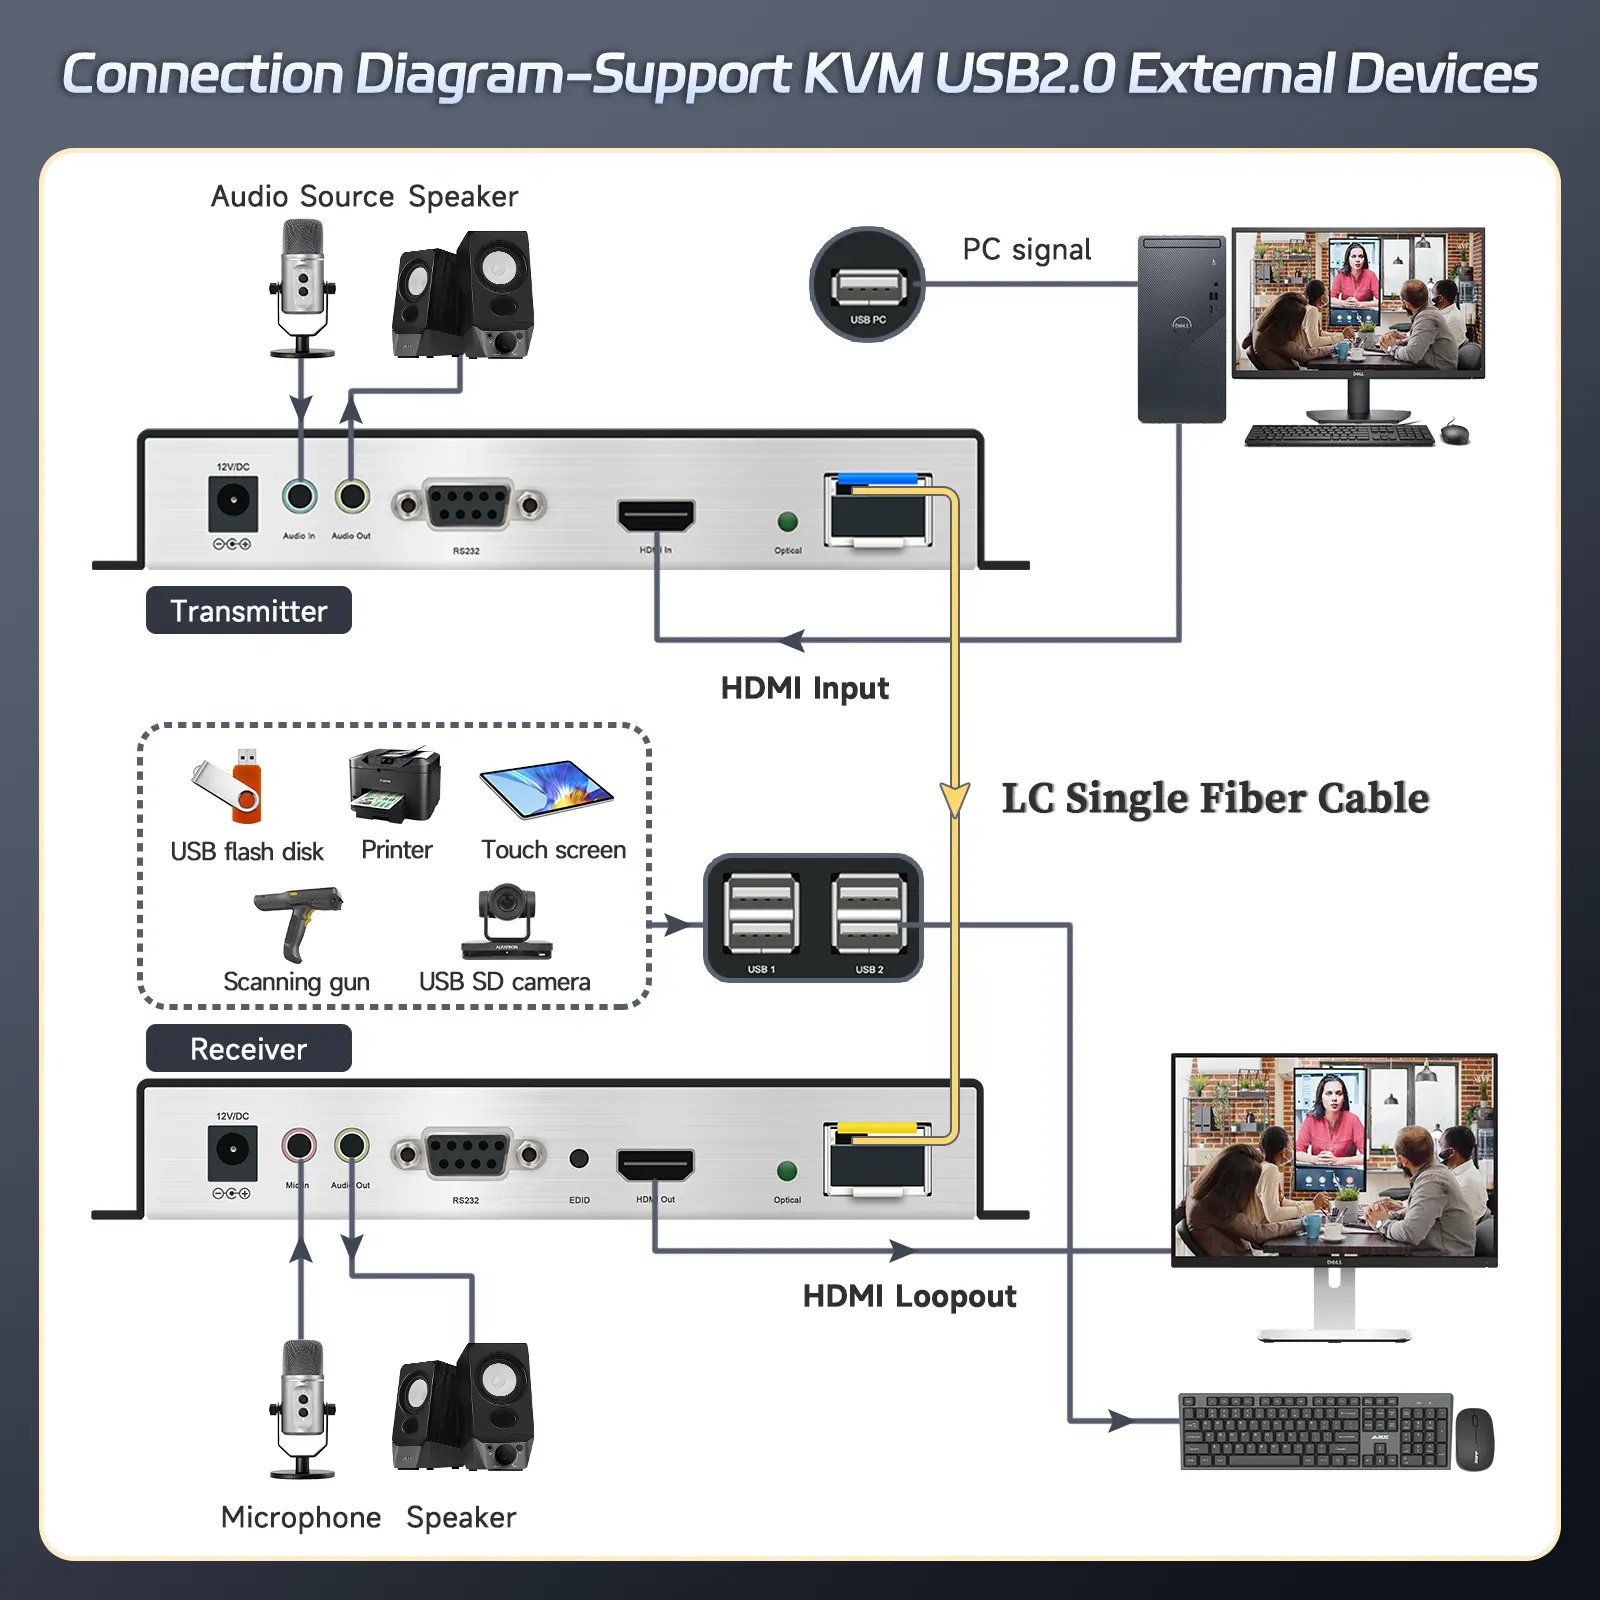 Orivision OKH501 4K@30 HDMI KVM Fiber Extender